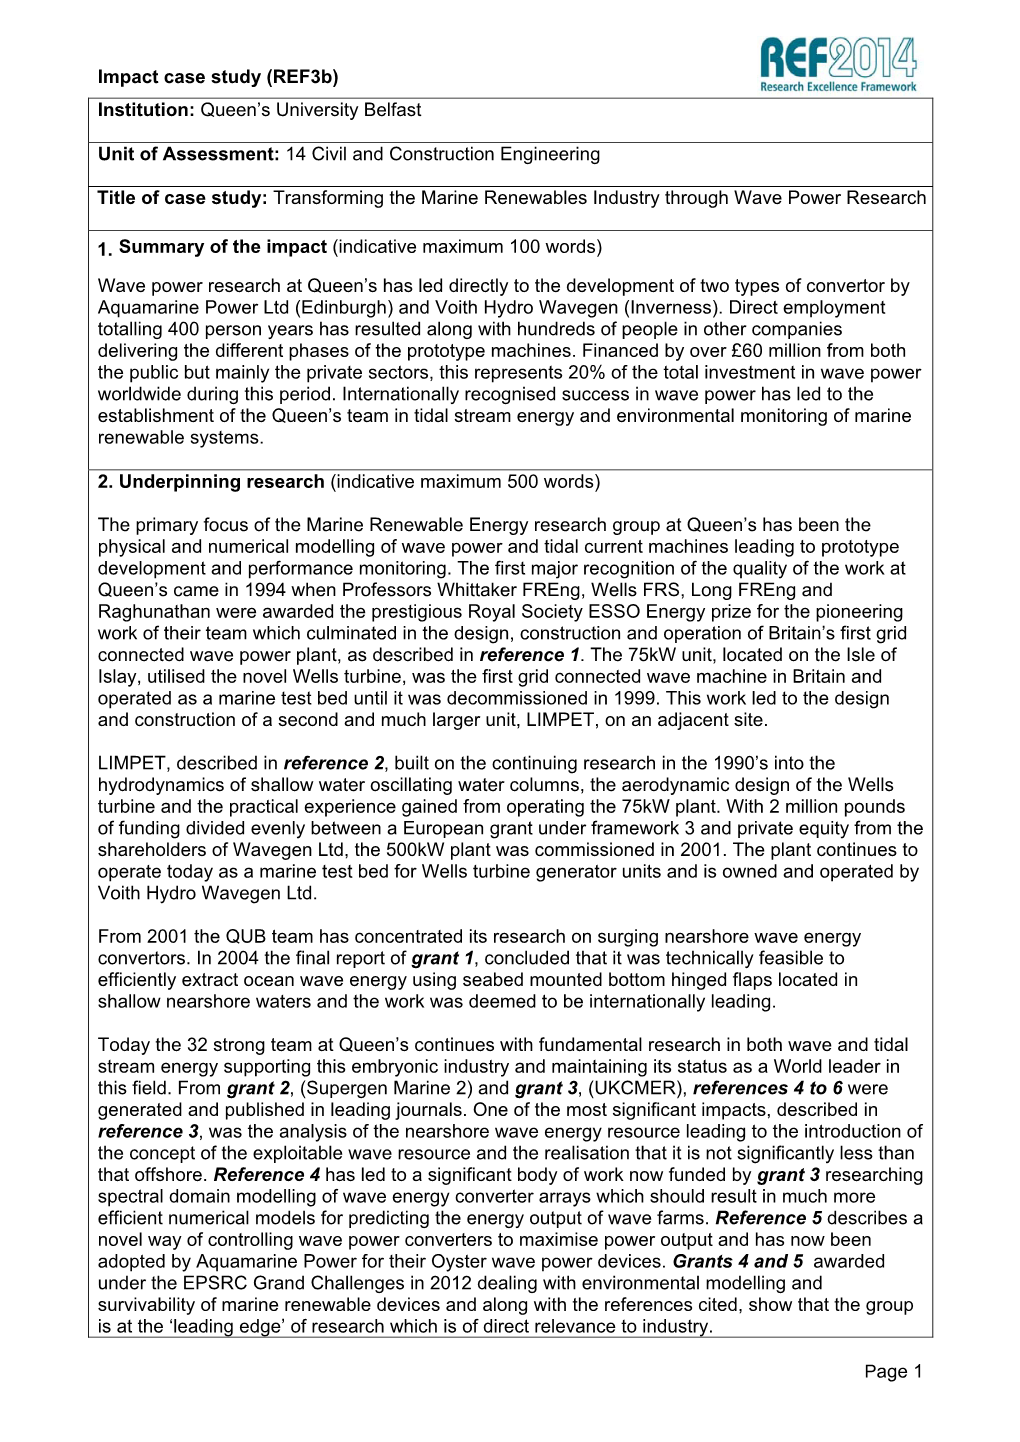 Impact Case Study (Ref3b) Page 1